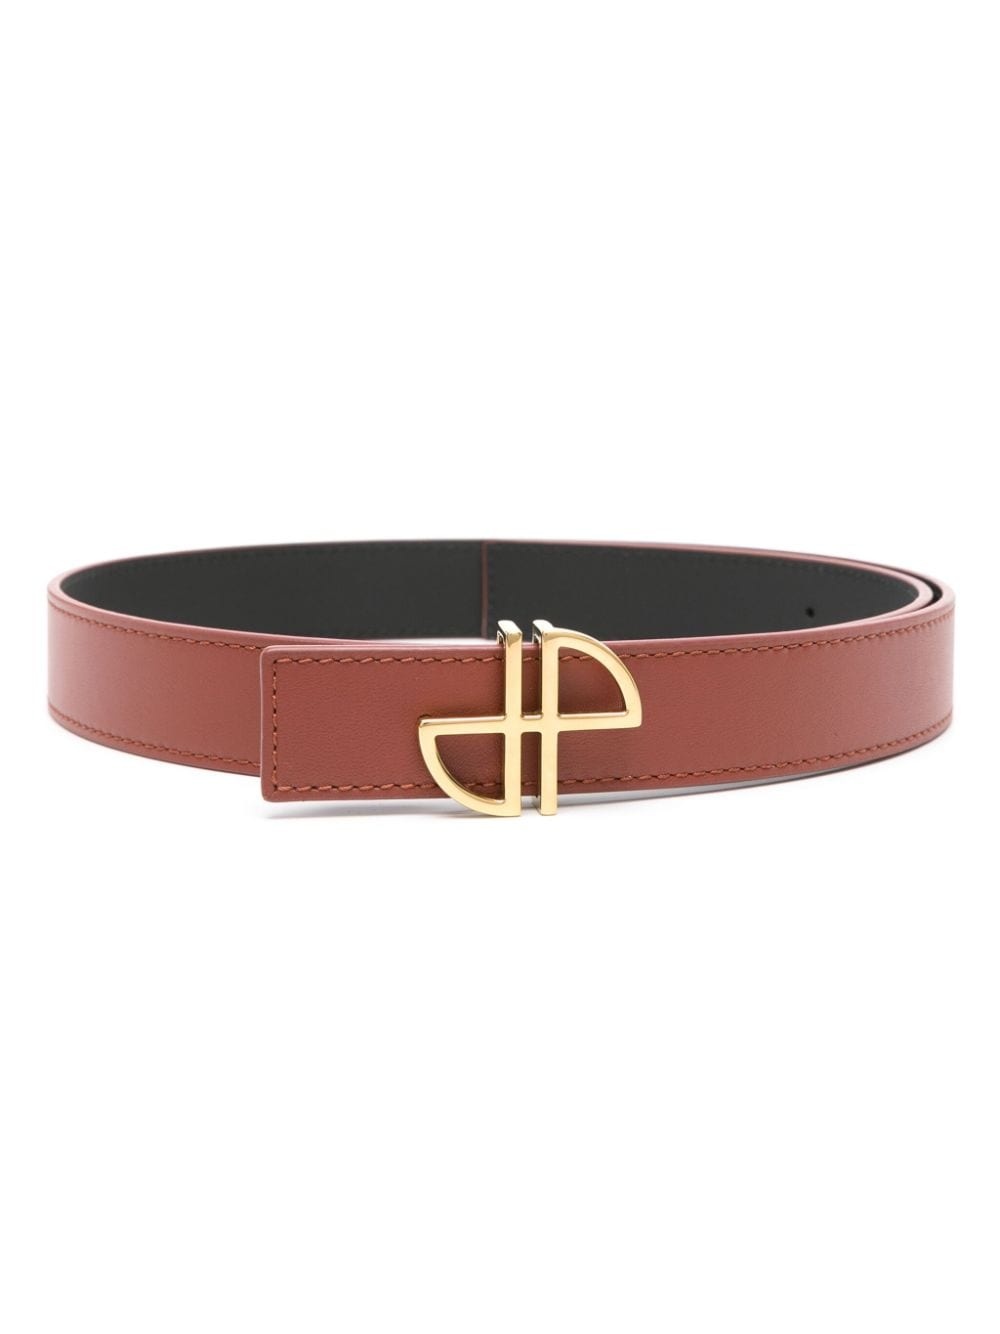 JP-buckle leather belt - 1